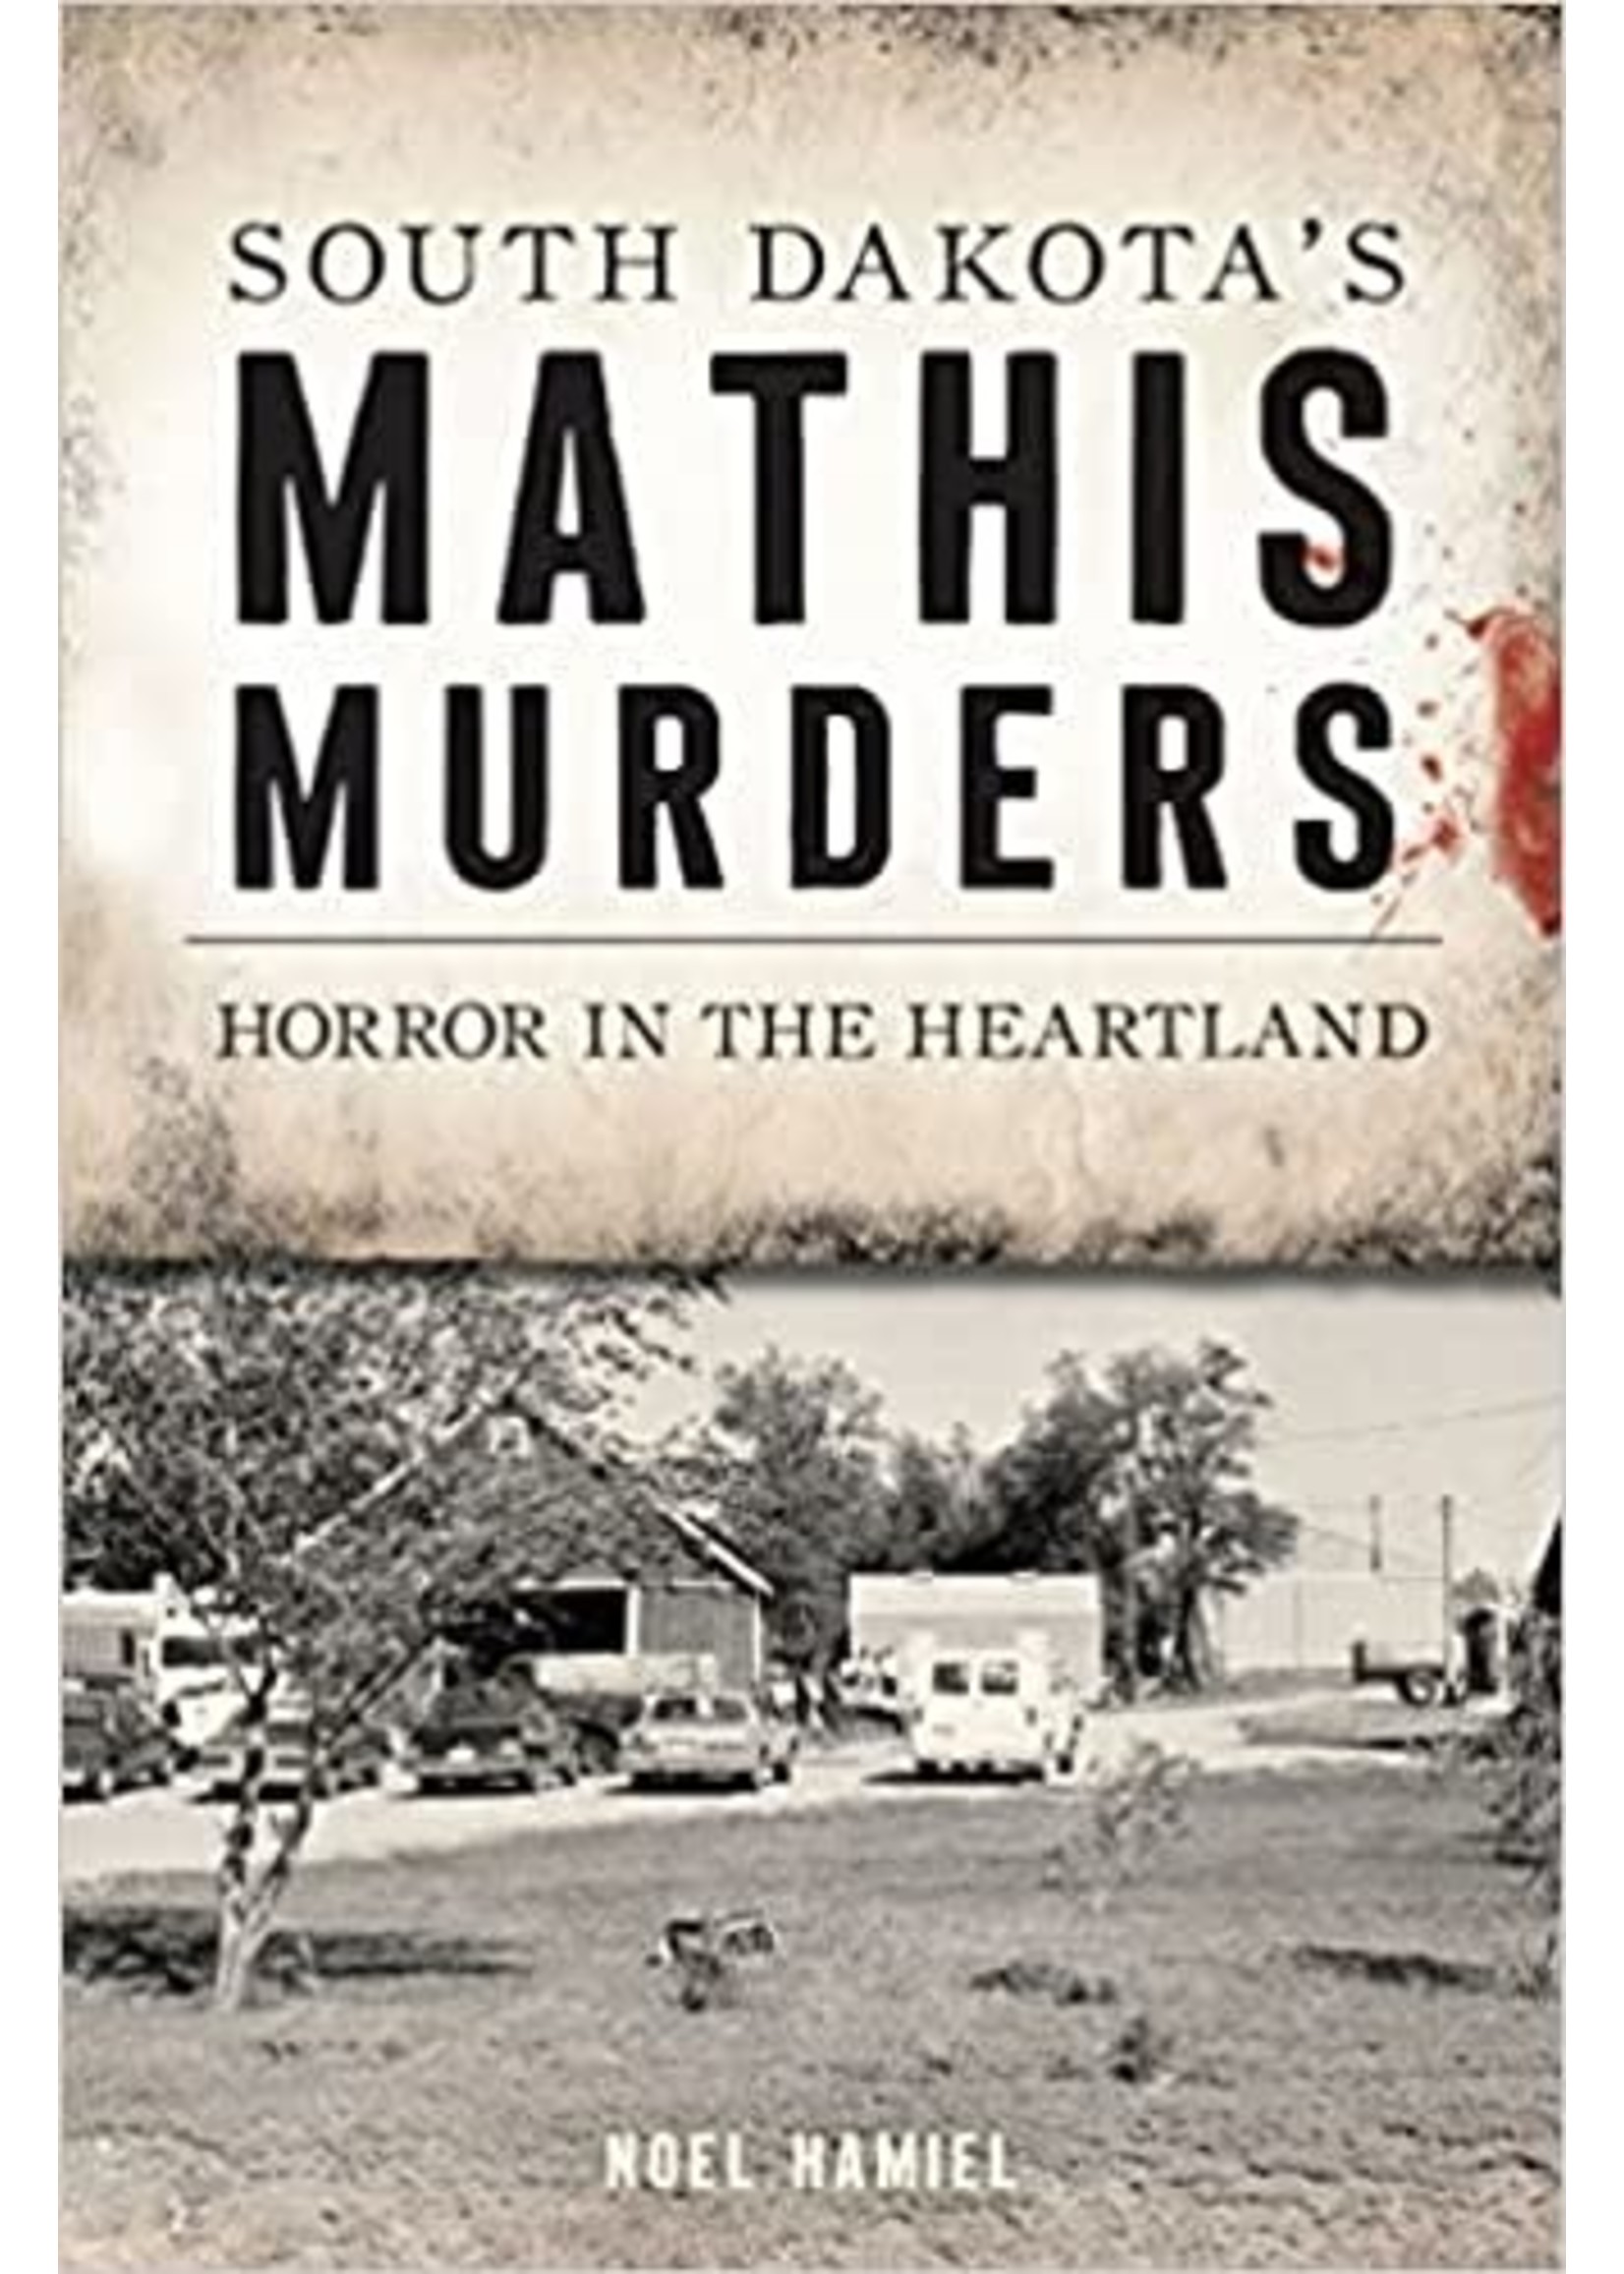 South Dakota's Mathis Murders